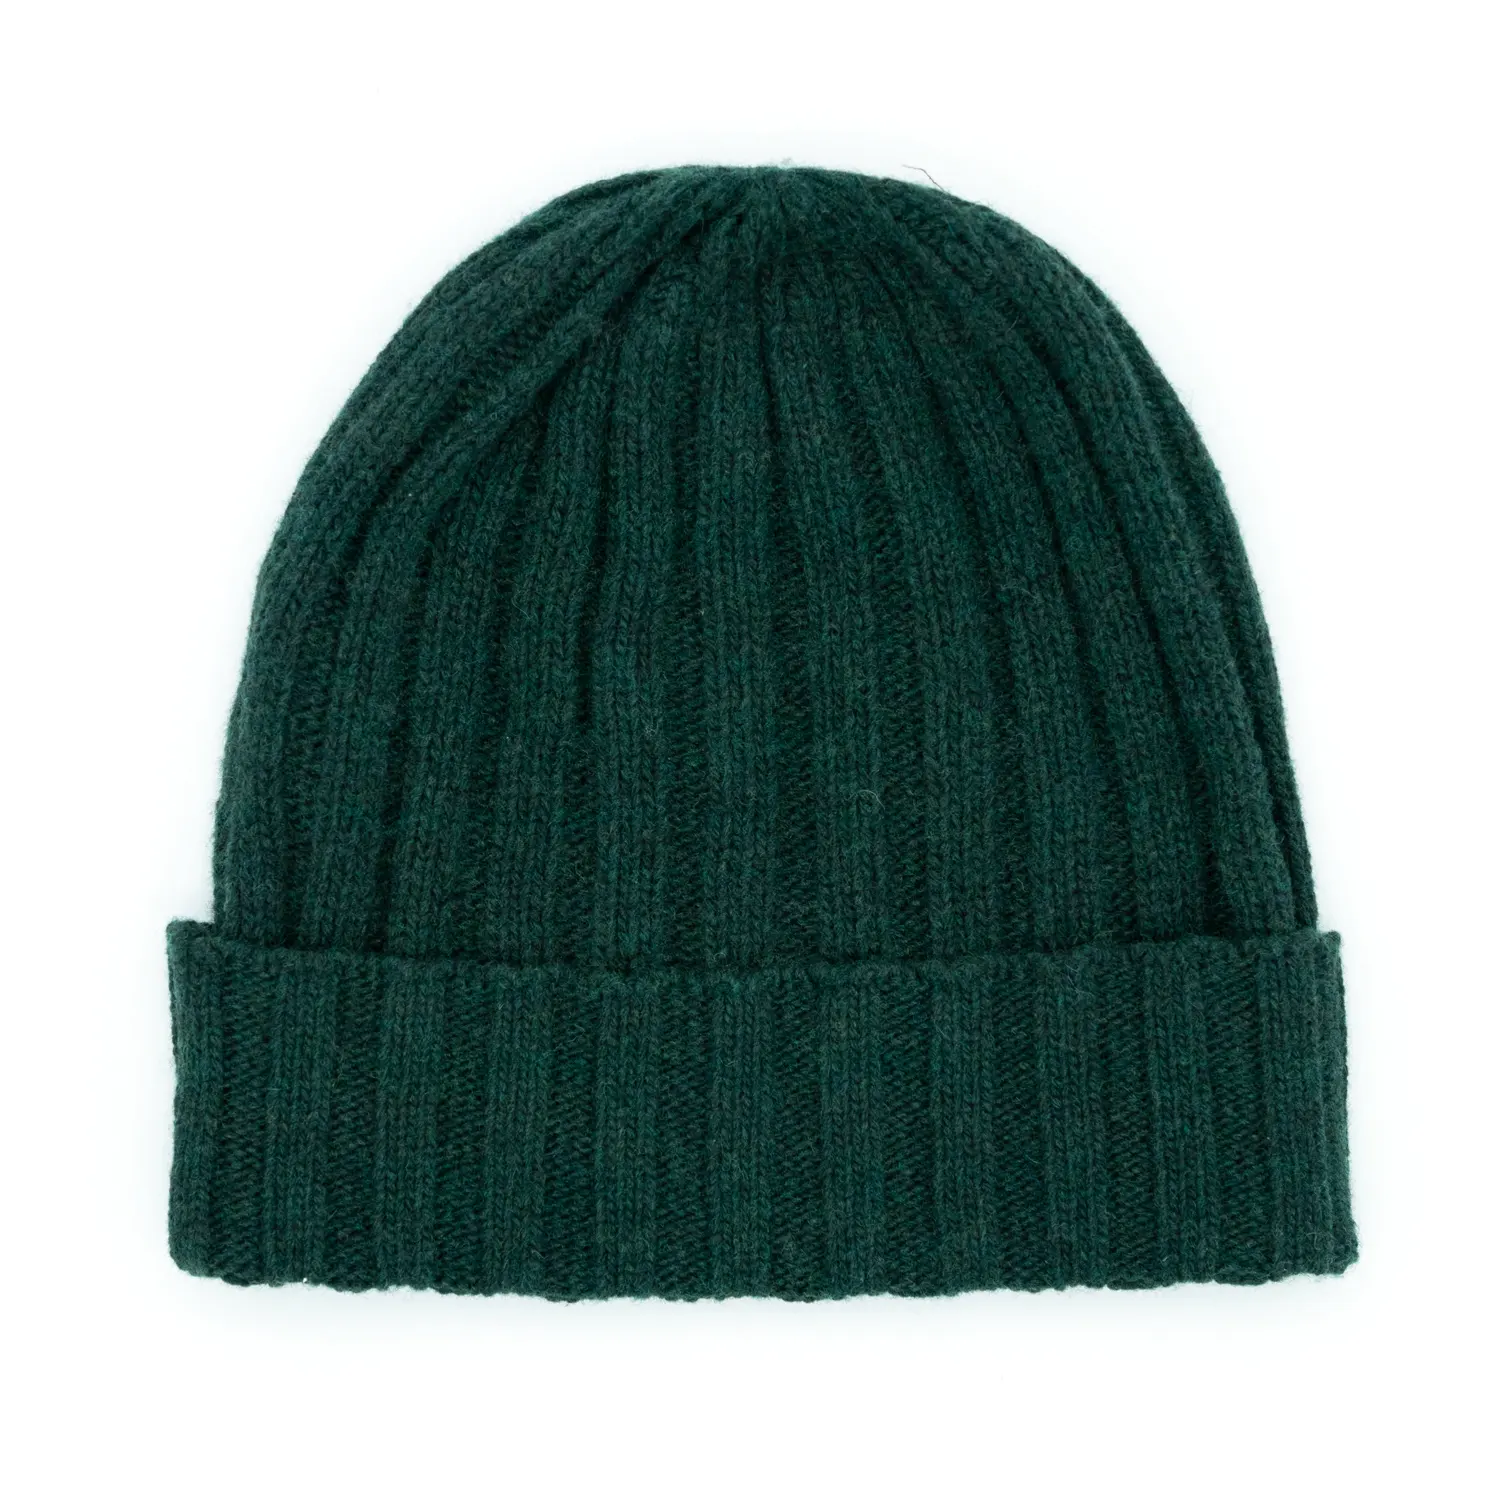 Cappelli invernali uomo lana